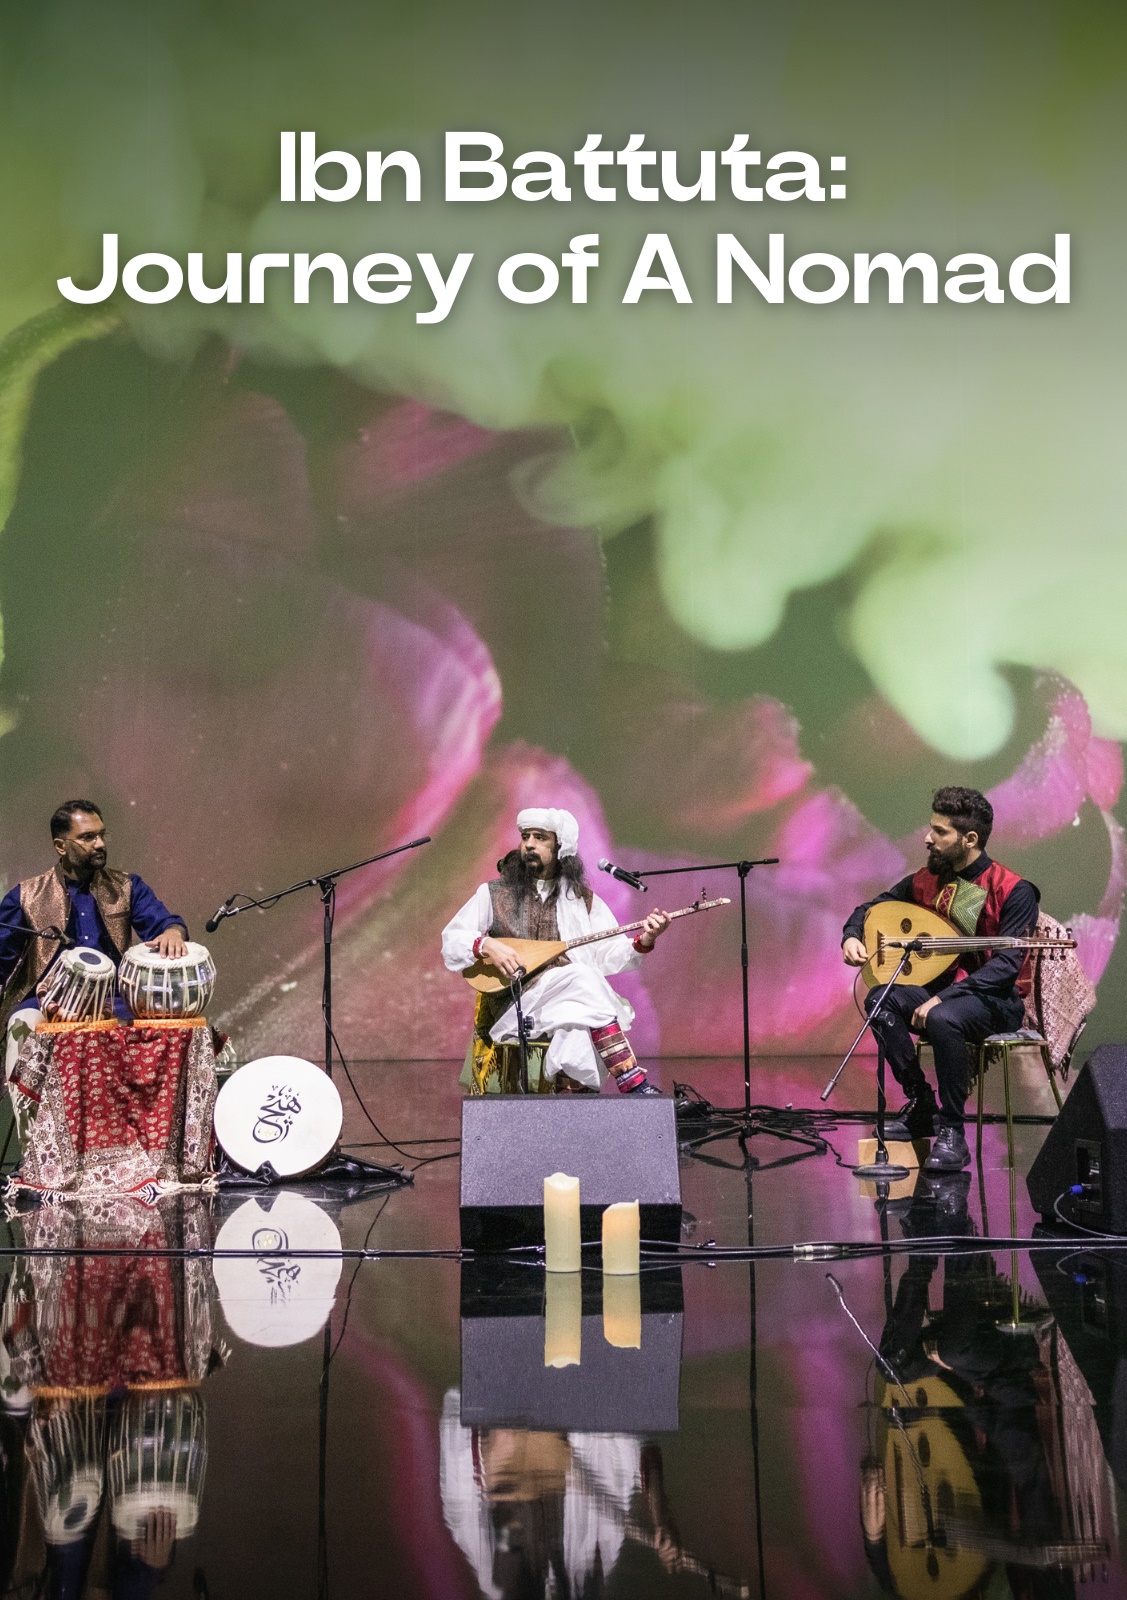 Ibn Battuta: Journey of a Nomad